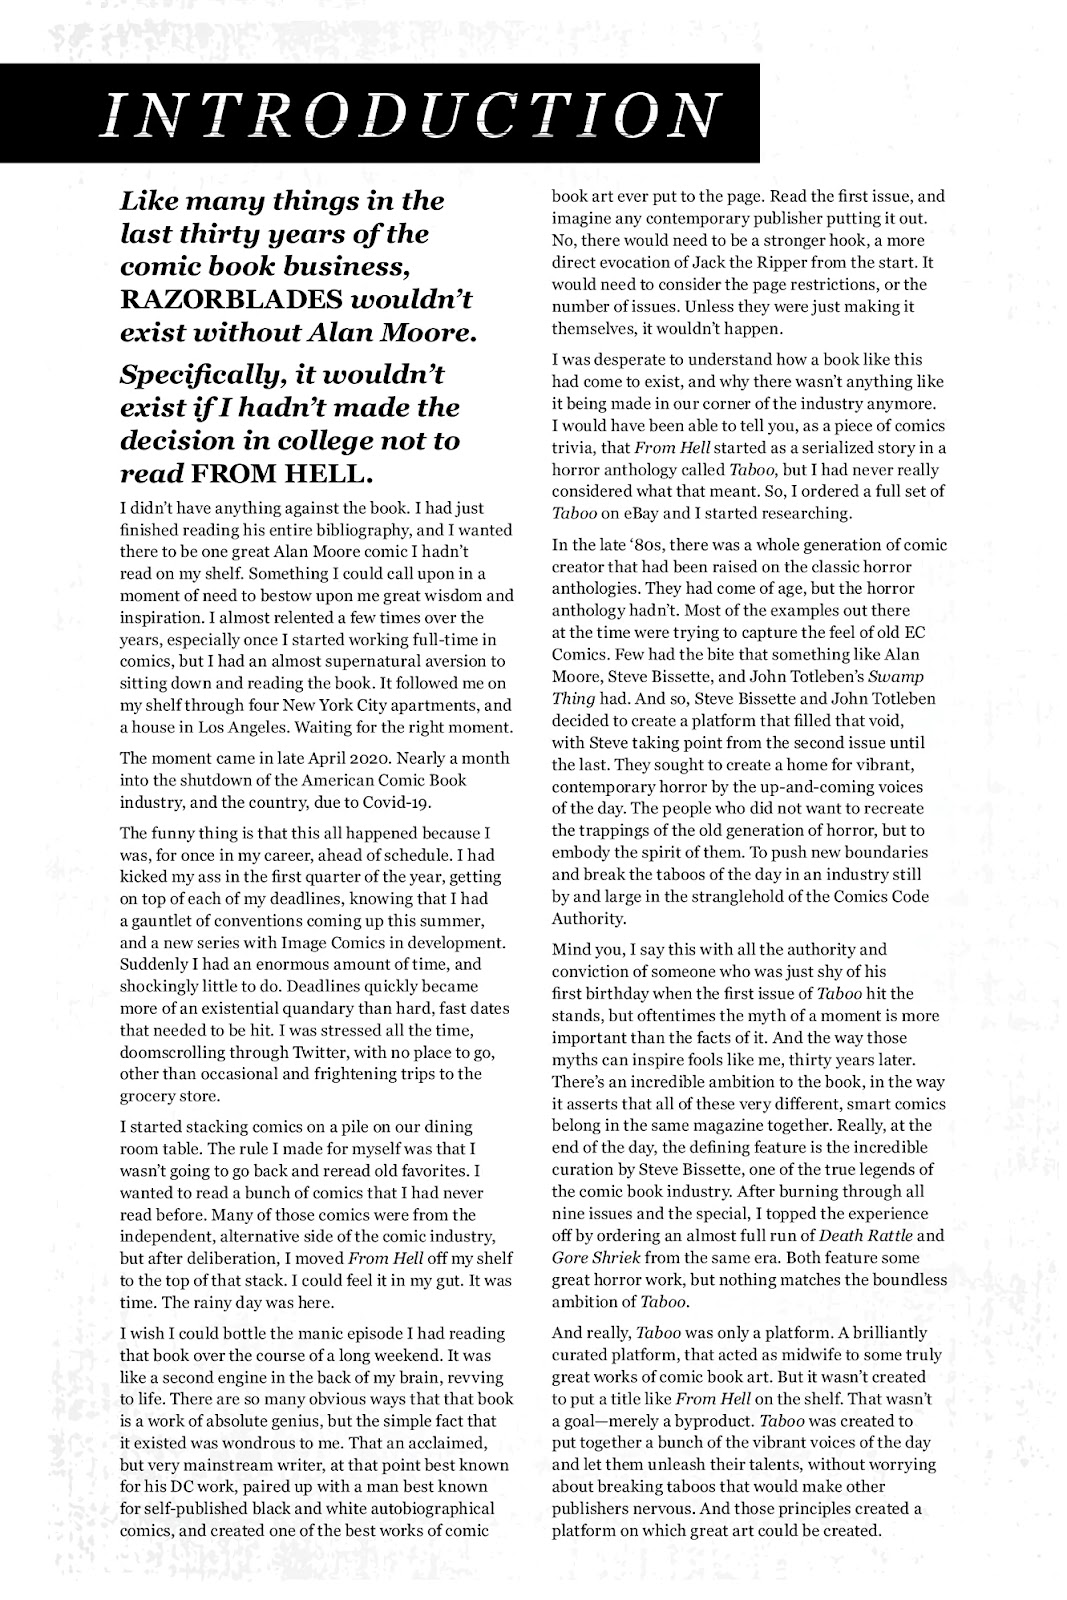 Razorblades: The Horror Magazine issue Year One Omnibus (Part 1) - Page 6